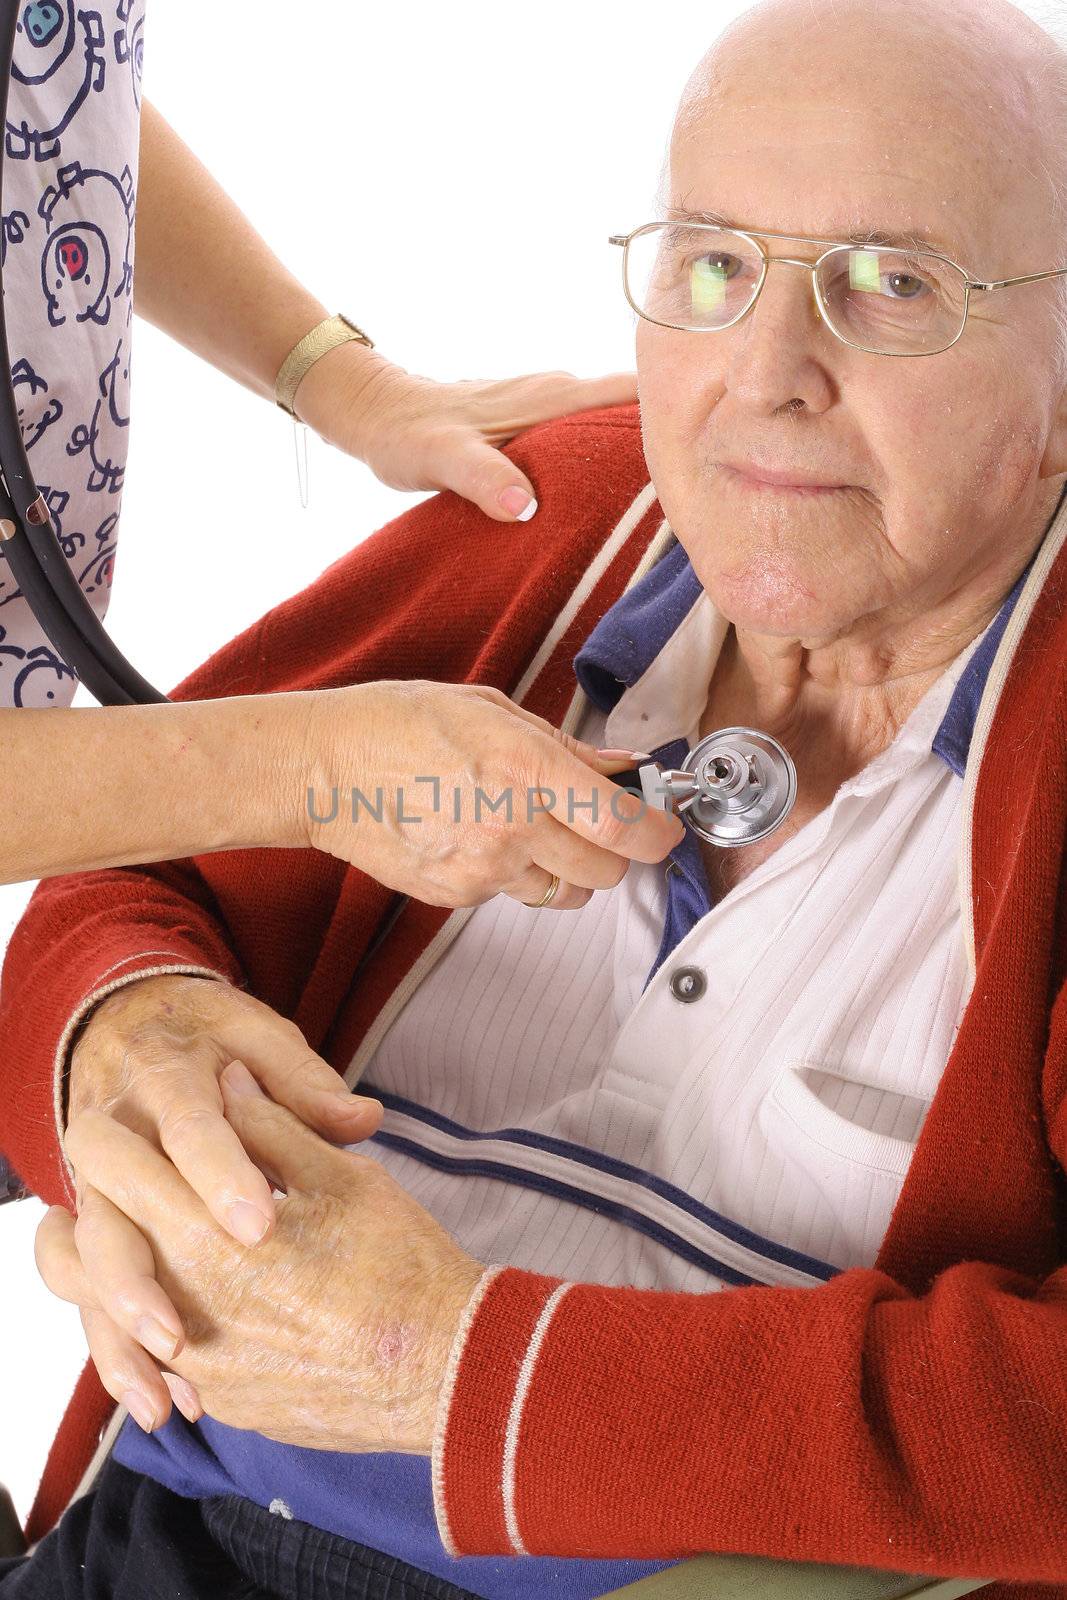 shot of a nurse checking heartbeat